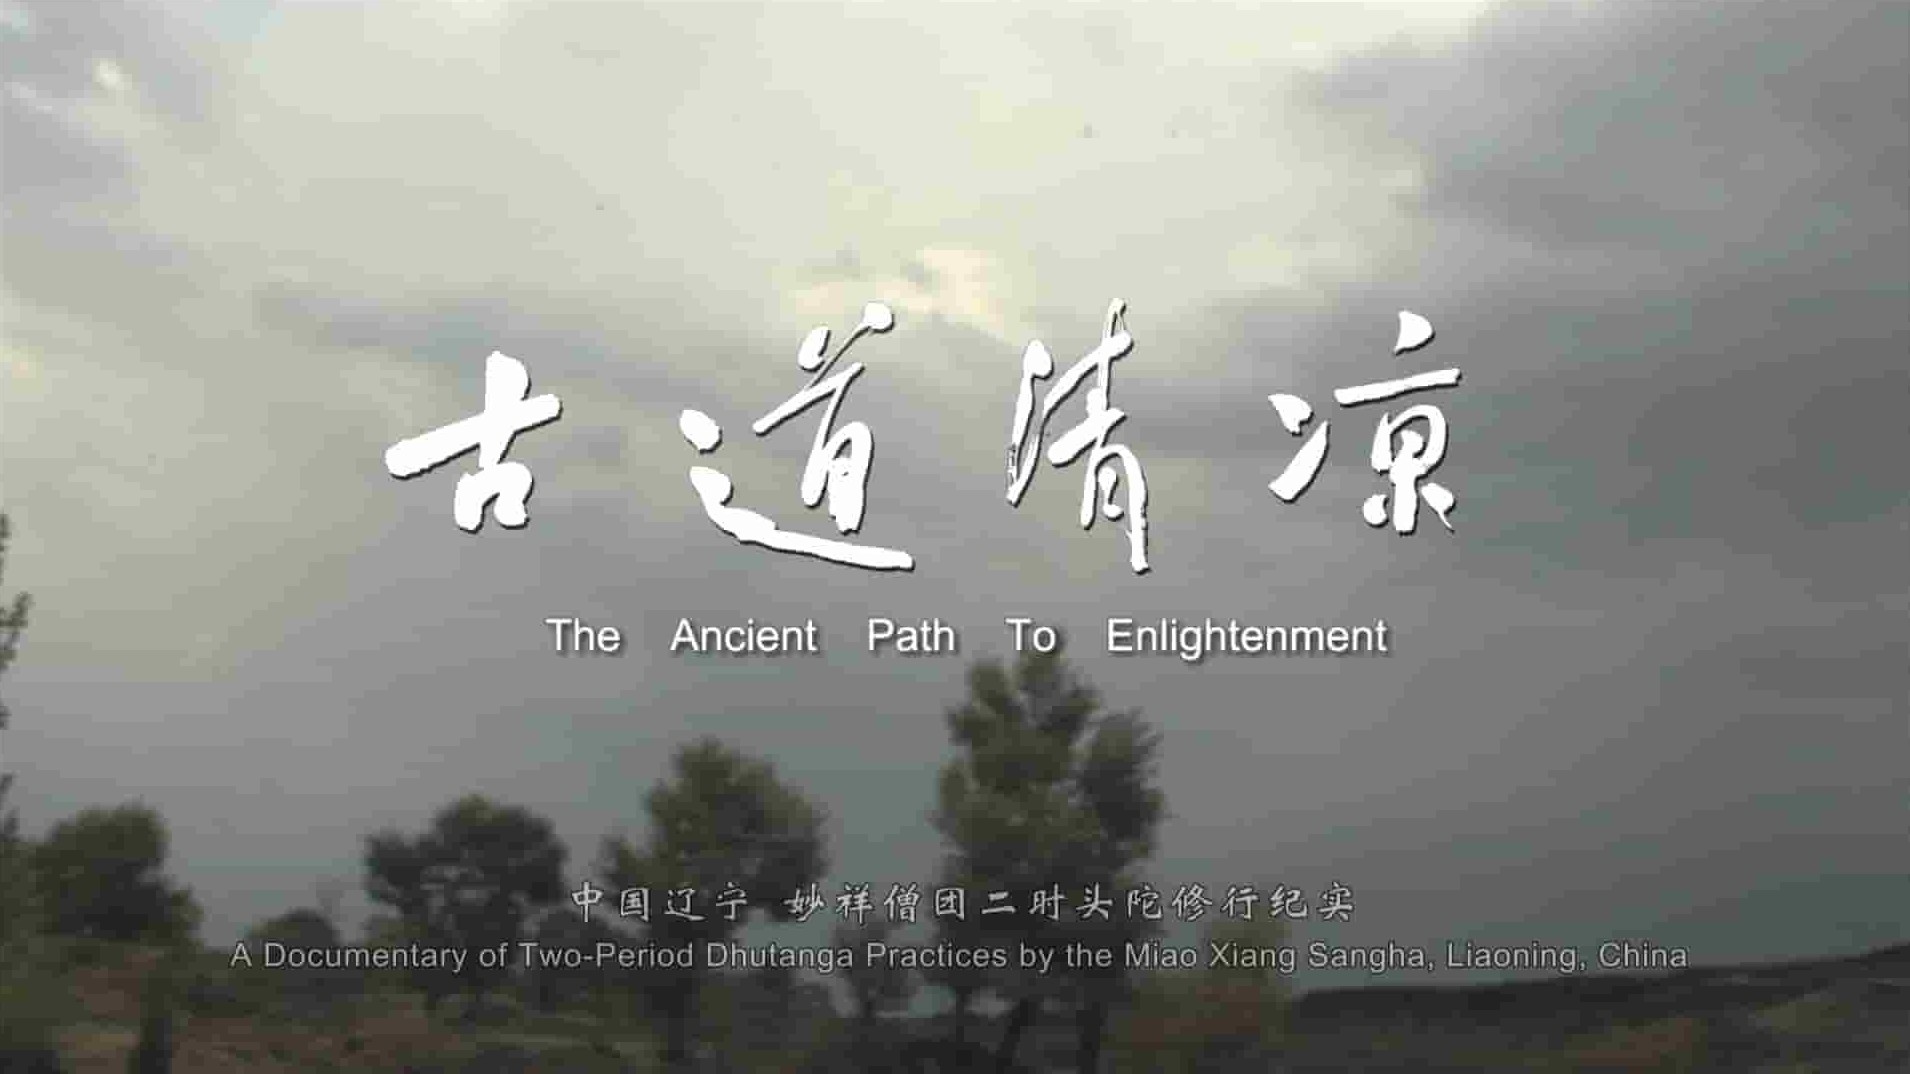 佛教纪录片《古道清凉 The Ancient Aath To Enlightenment》全13集 国语中字 720P高清网盘下载